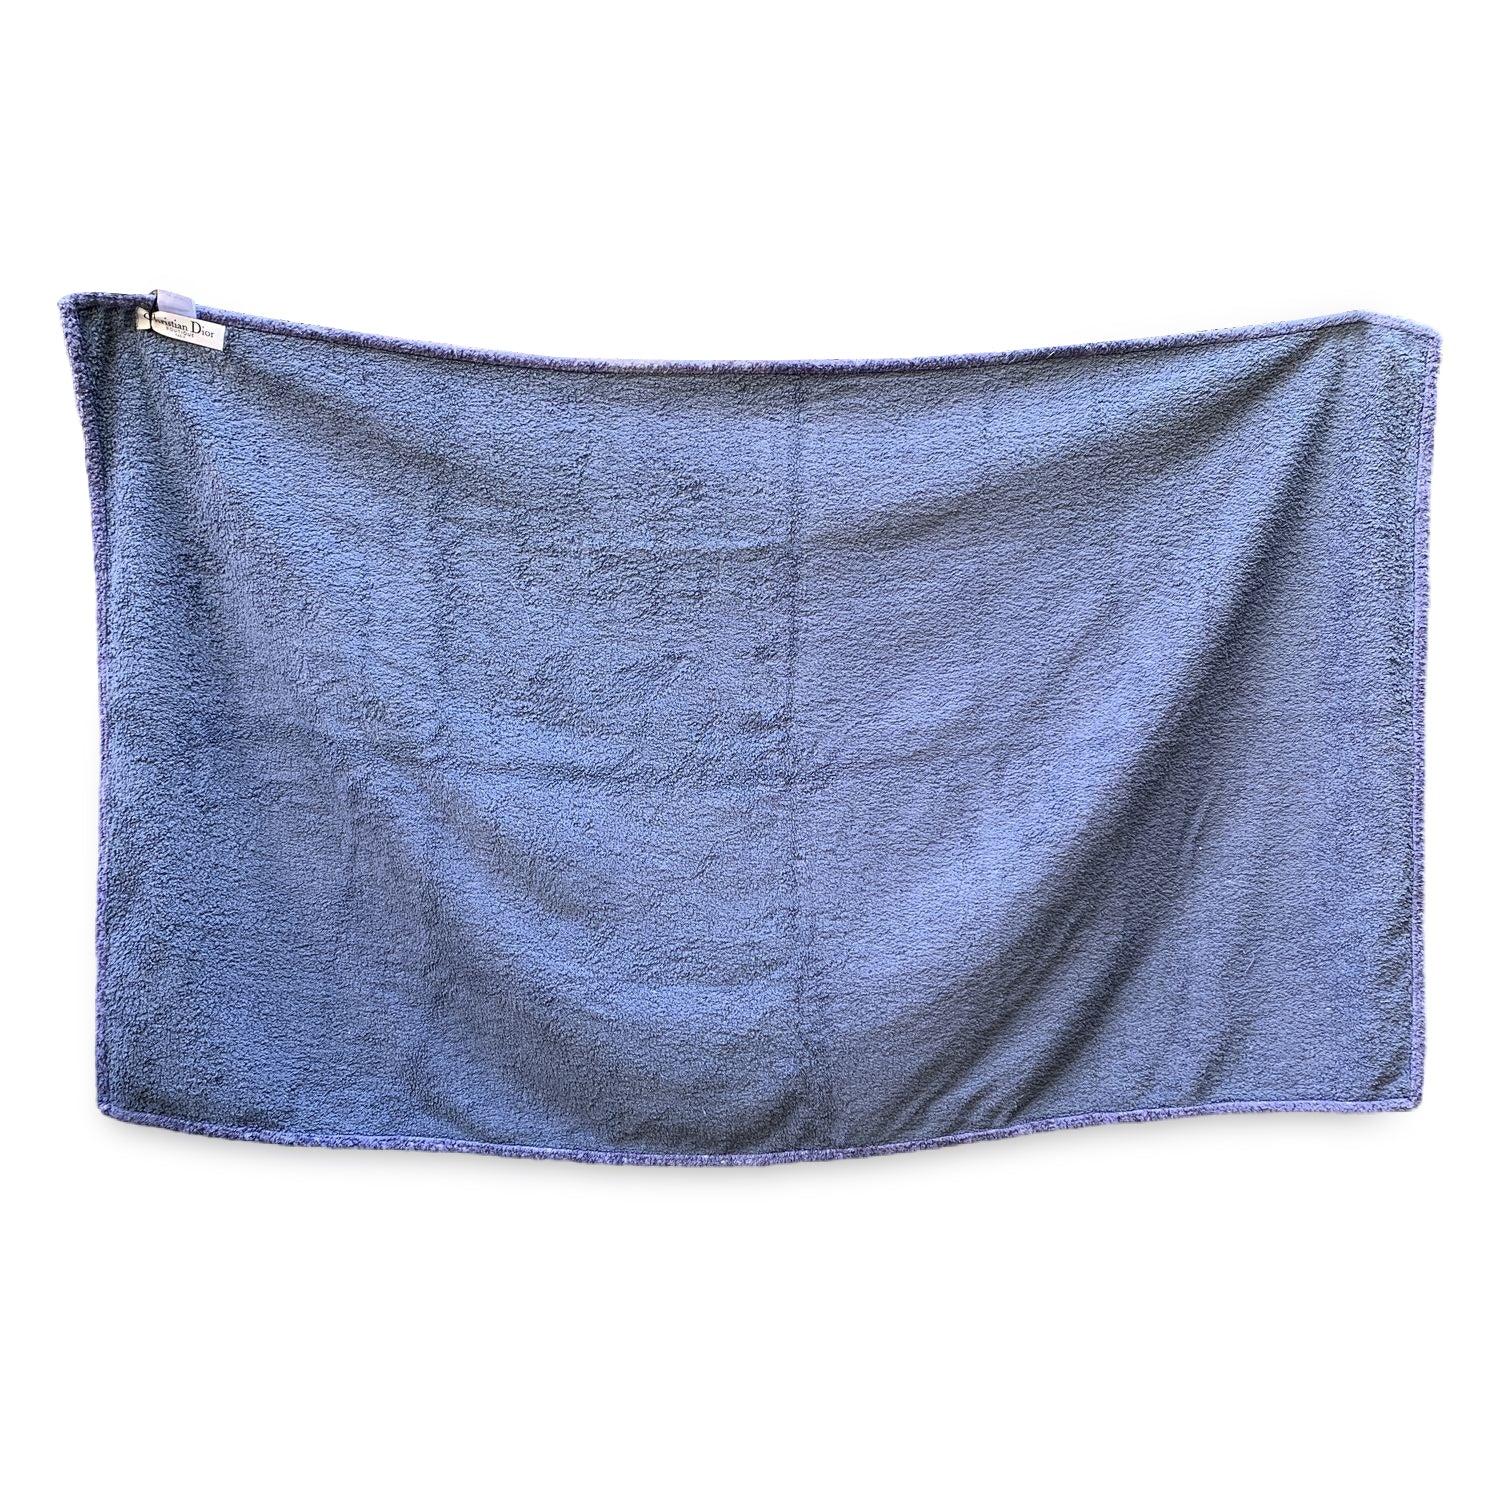 Vintage Christian Dior Terrycloth Cotton Large Beach Towel with Monogram oblique pattern. Blue color. 100% cotton. Measurements: 35 x 60 inches - 88.8 x 152.4cm. Details MATERIAL: Cotton COLOR: Blue MODEL: Oblique GENDER: Unisex Adults COUNTRY OF